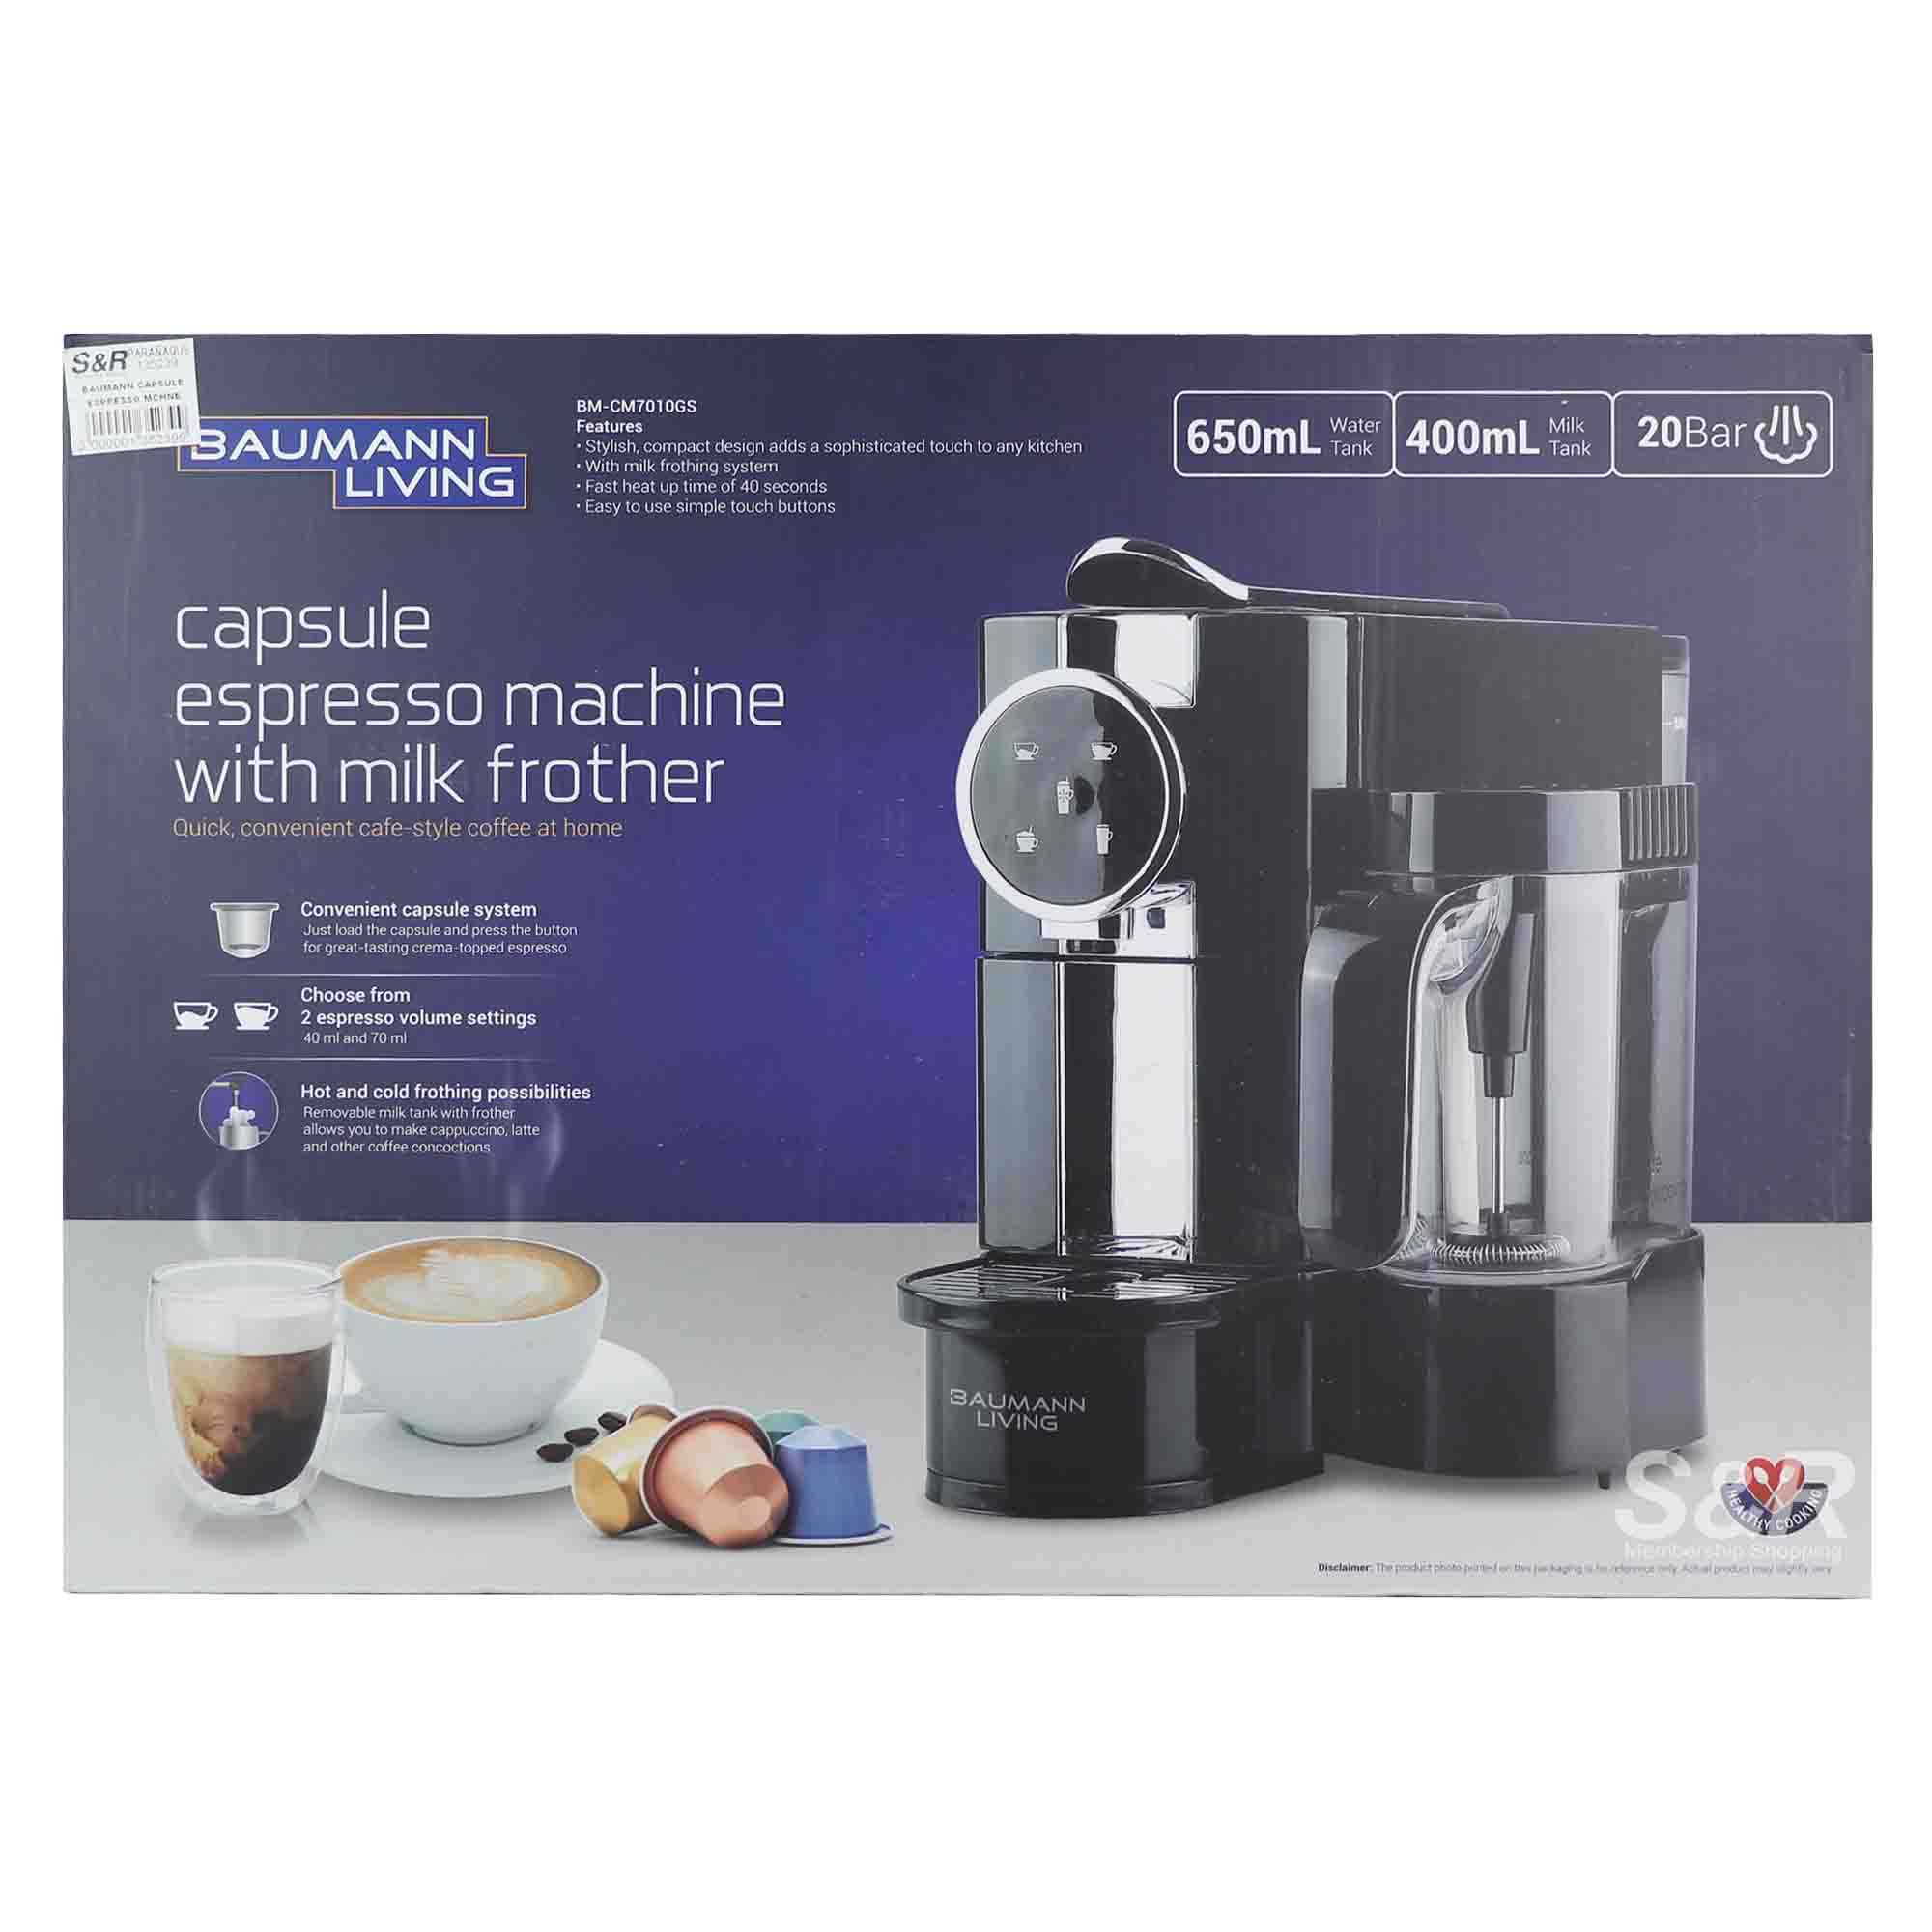 Baumann Living Capsule Espresso Machine with milk frother BM-CM7010GS